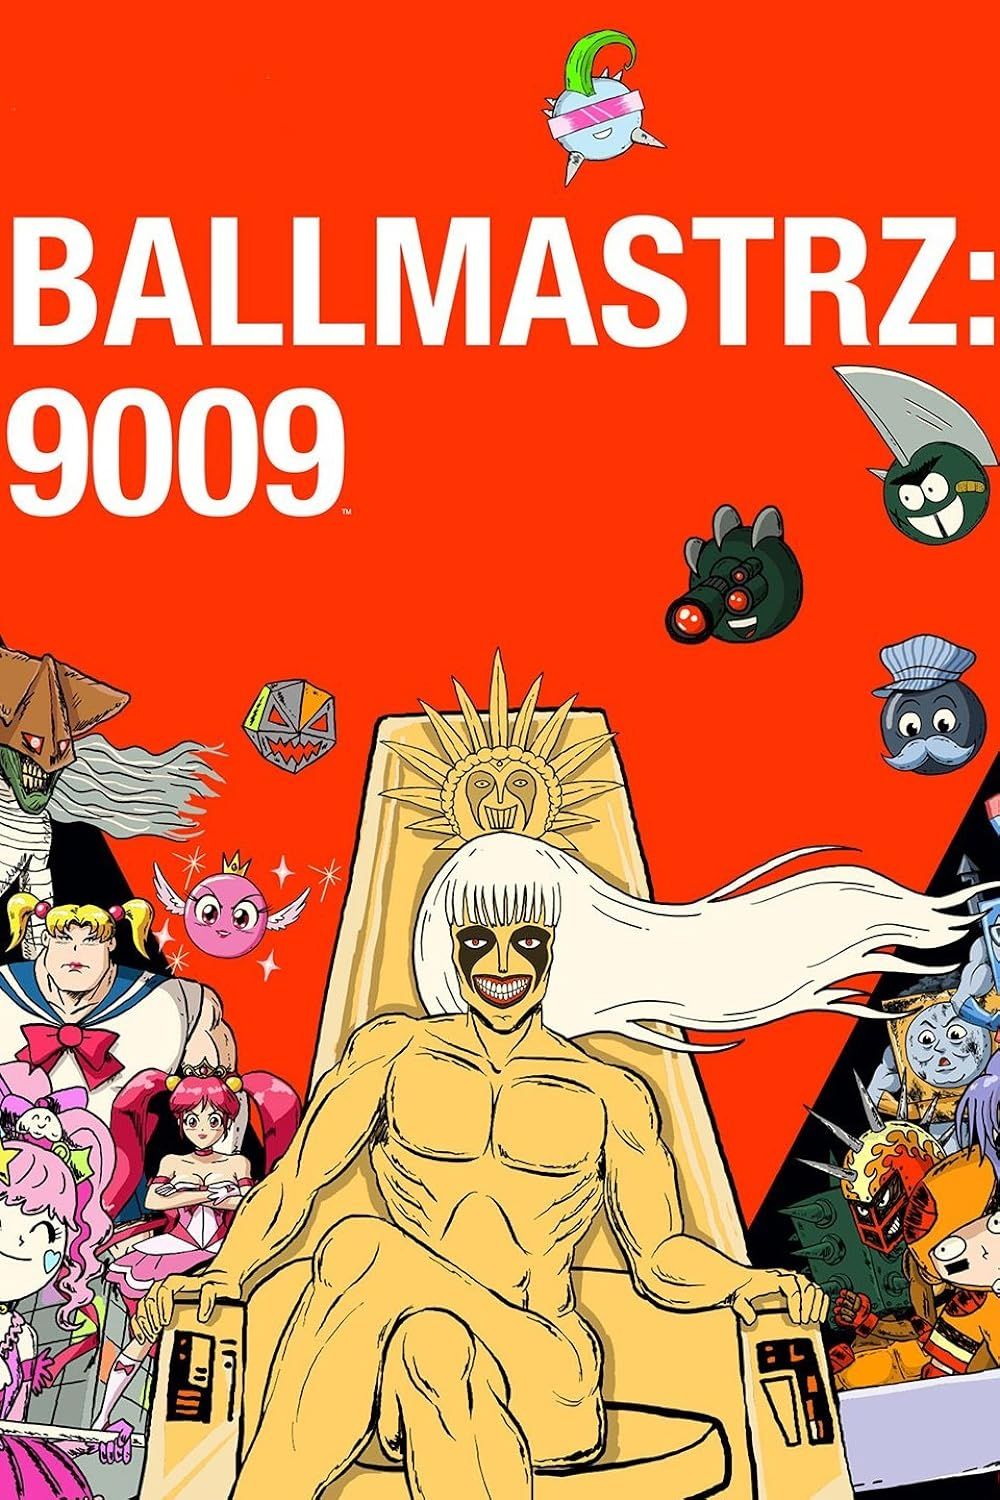 The Cast on the Ballmastrz 9009 Promo